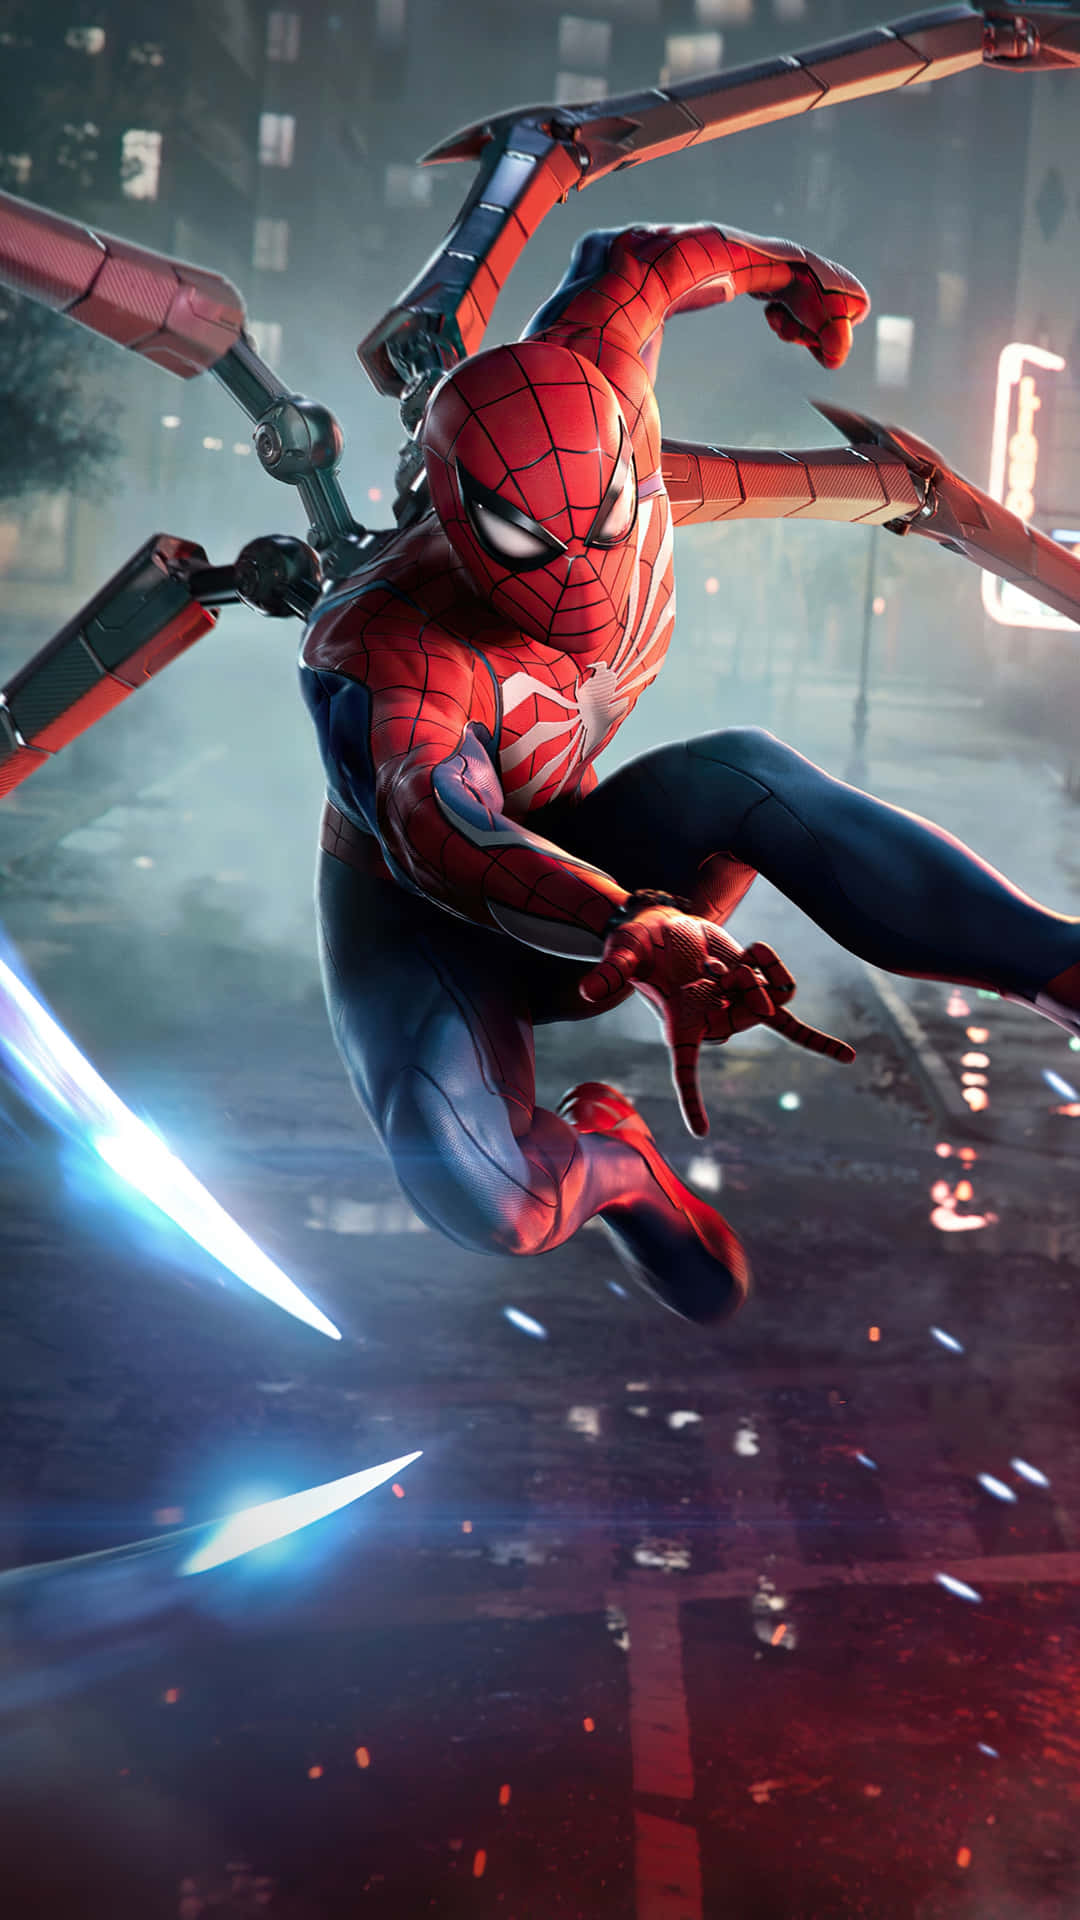 Spiderman Action Pose Night City Wallpaper